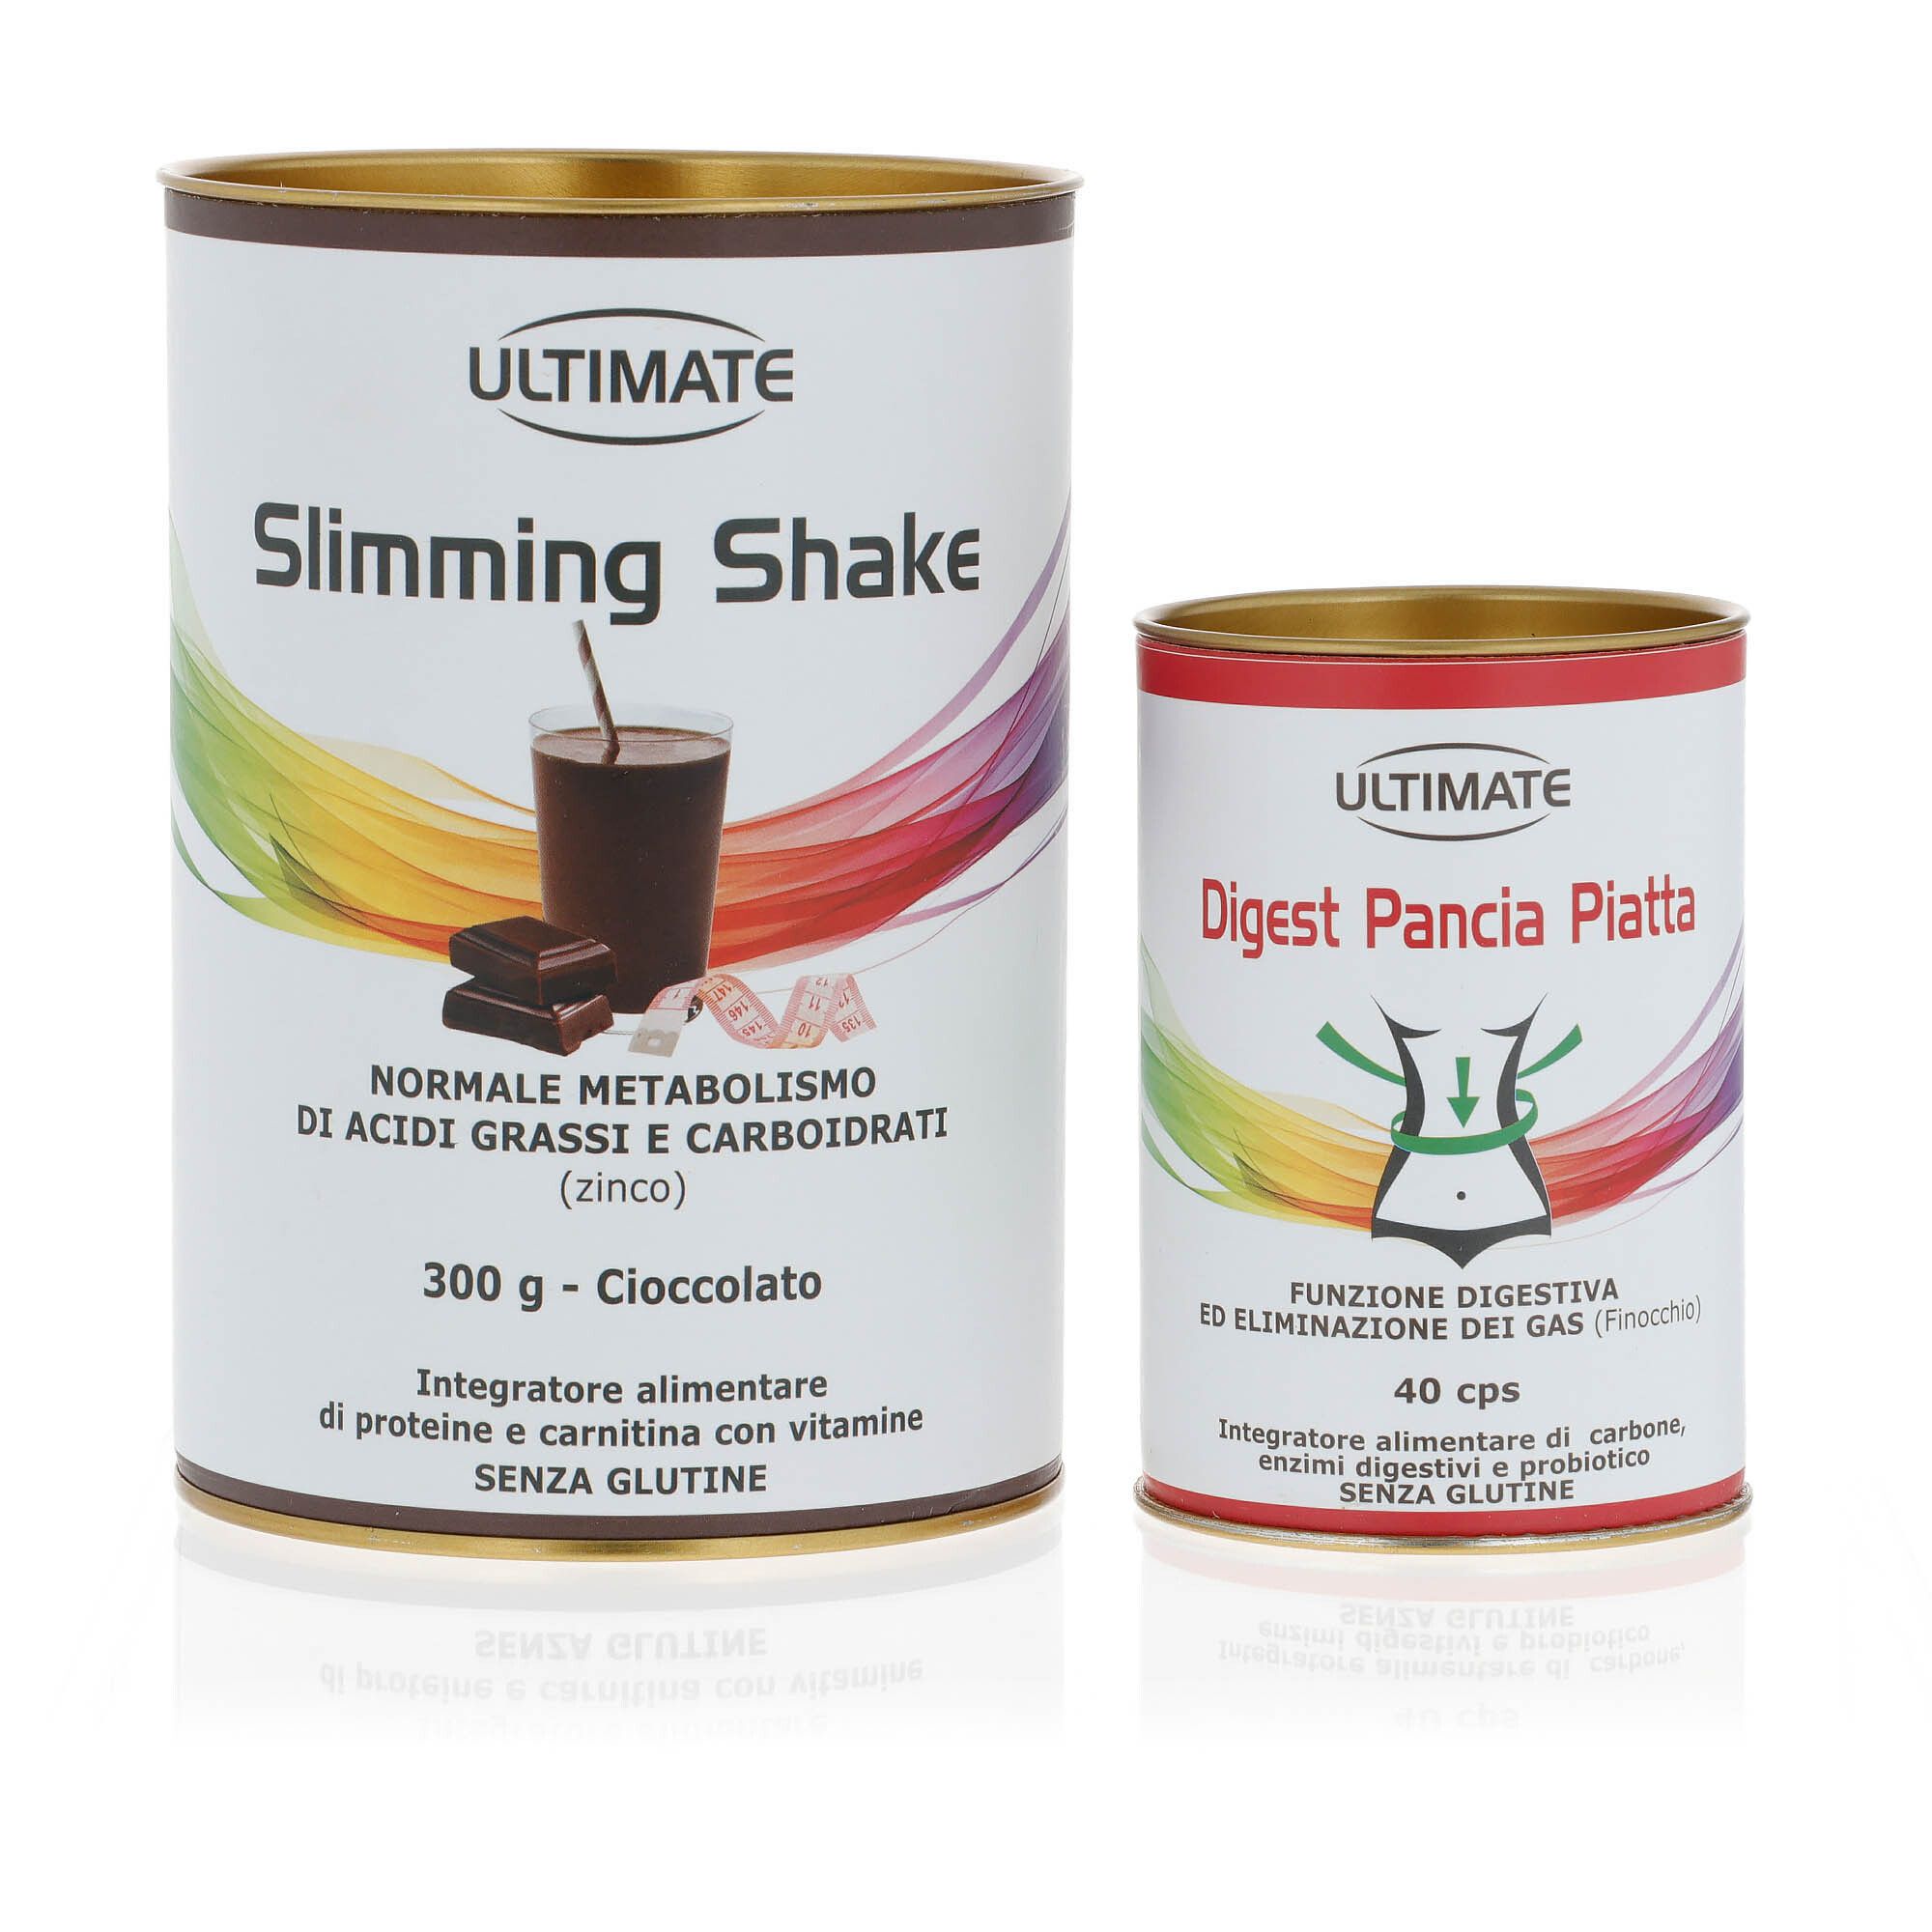 Digest pancia piatta e Slimming Shake integratori alimentari